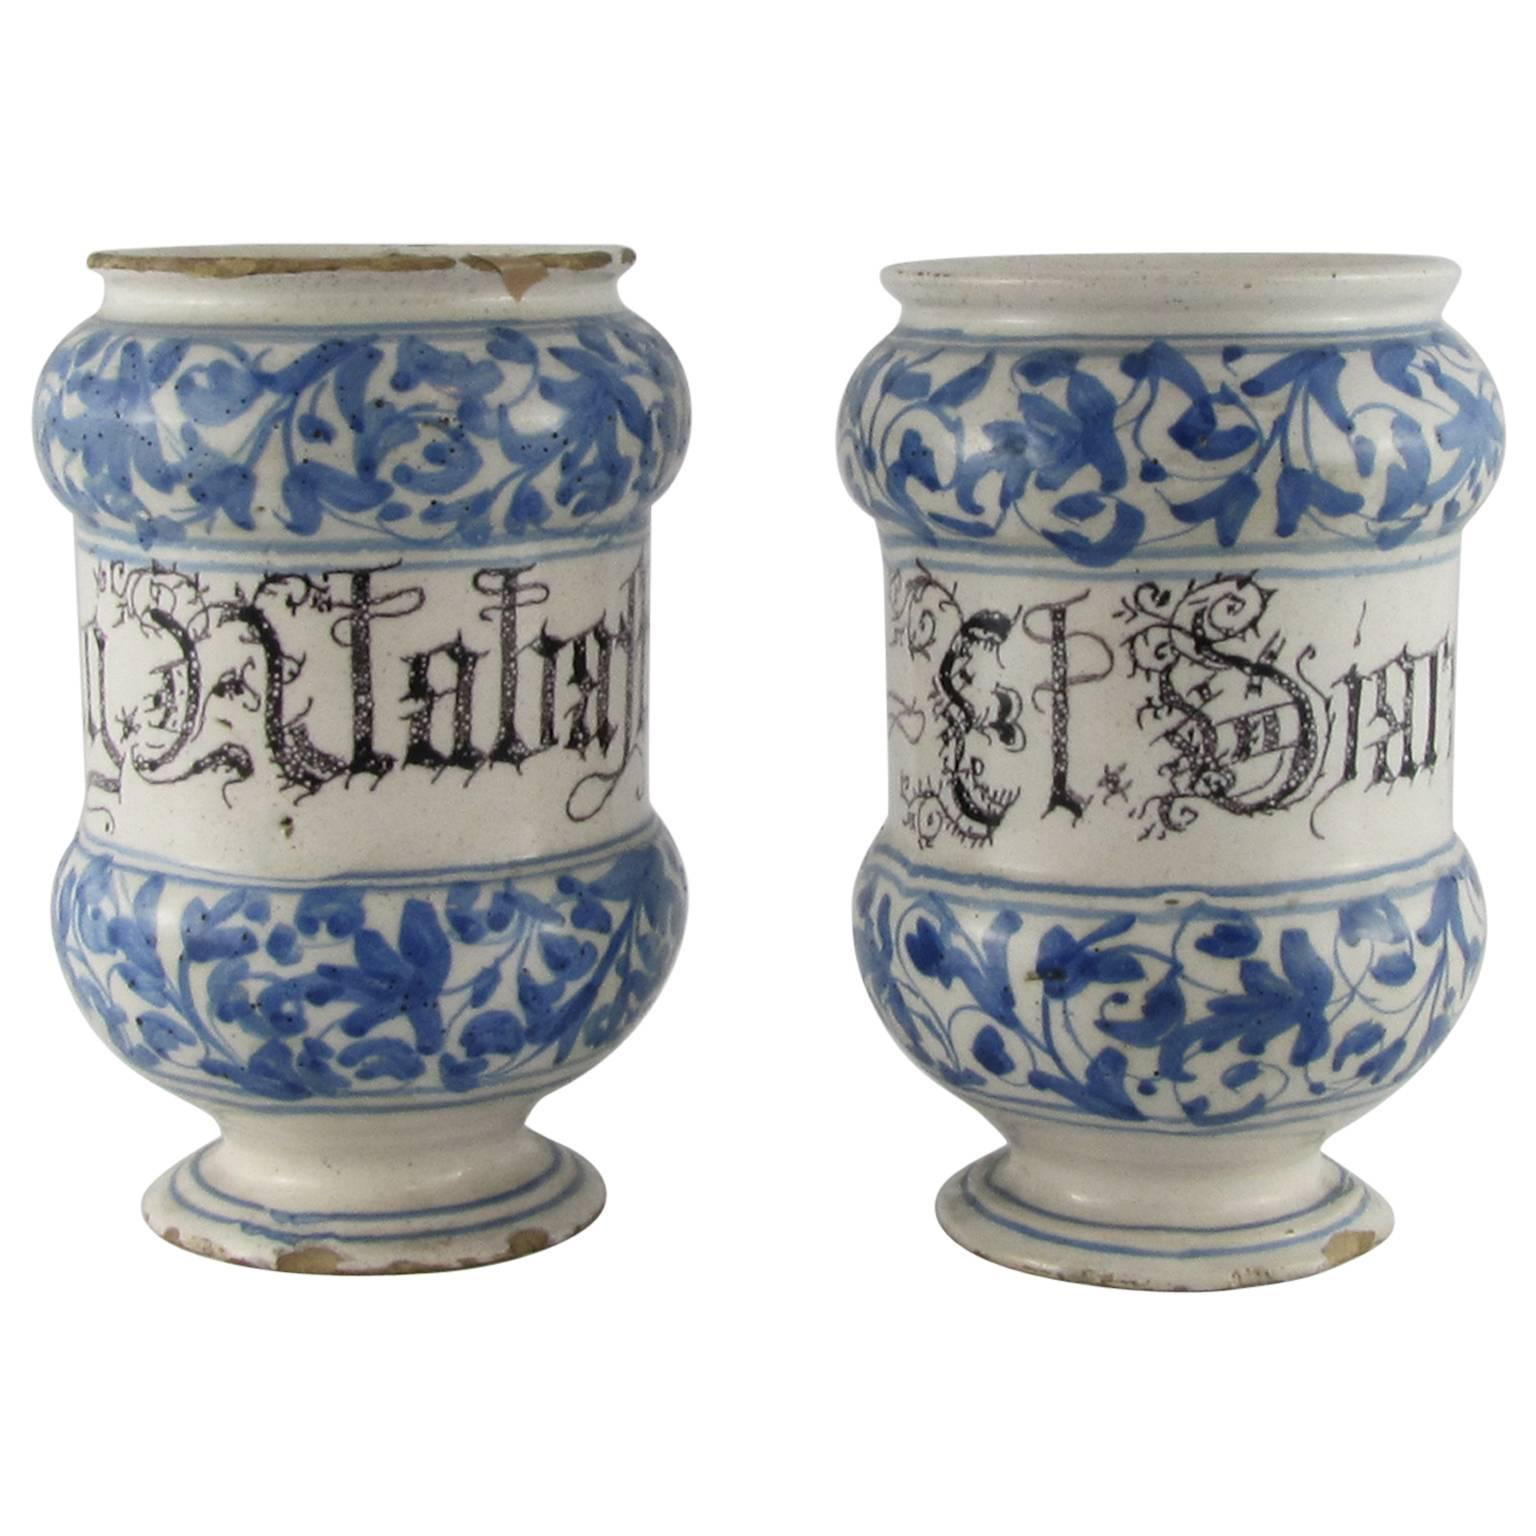 Two Italian Mid-18th Century Albarelli or Maiolica Earthenware Jars